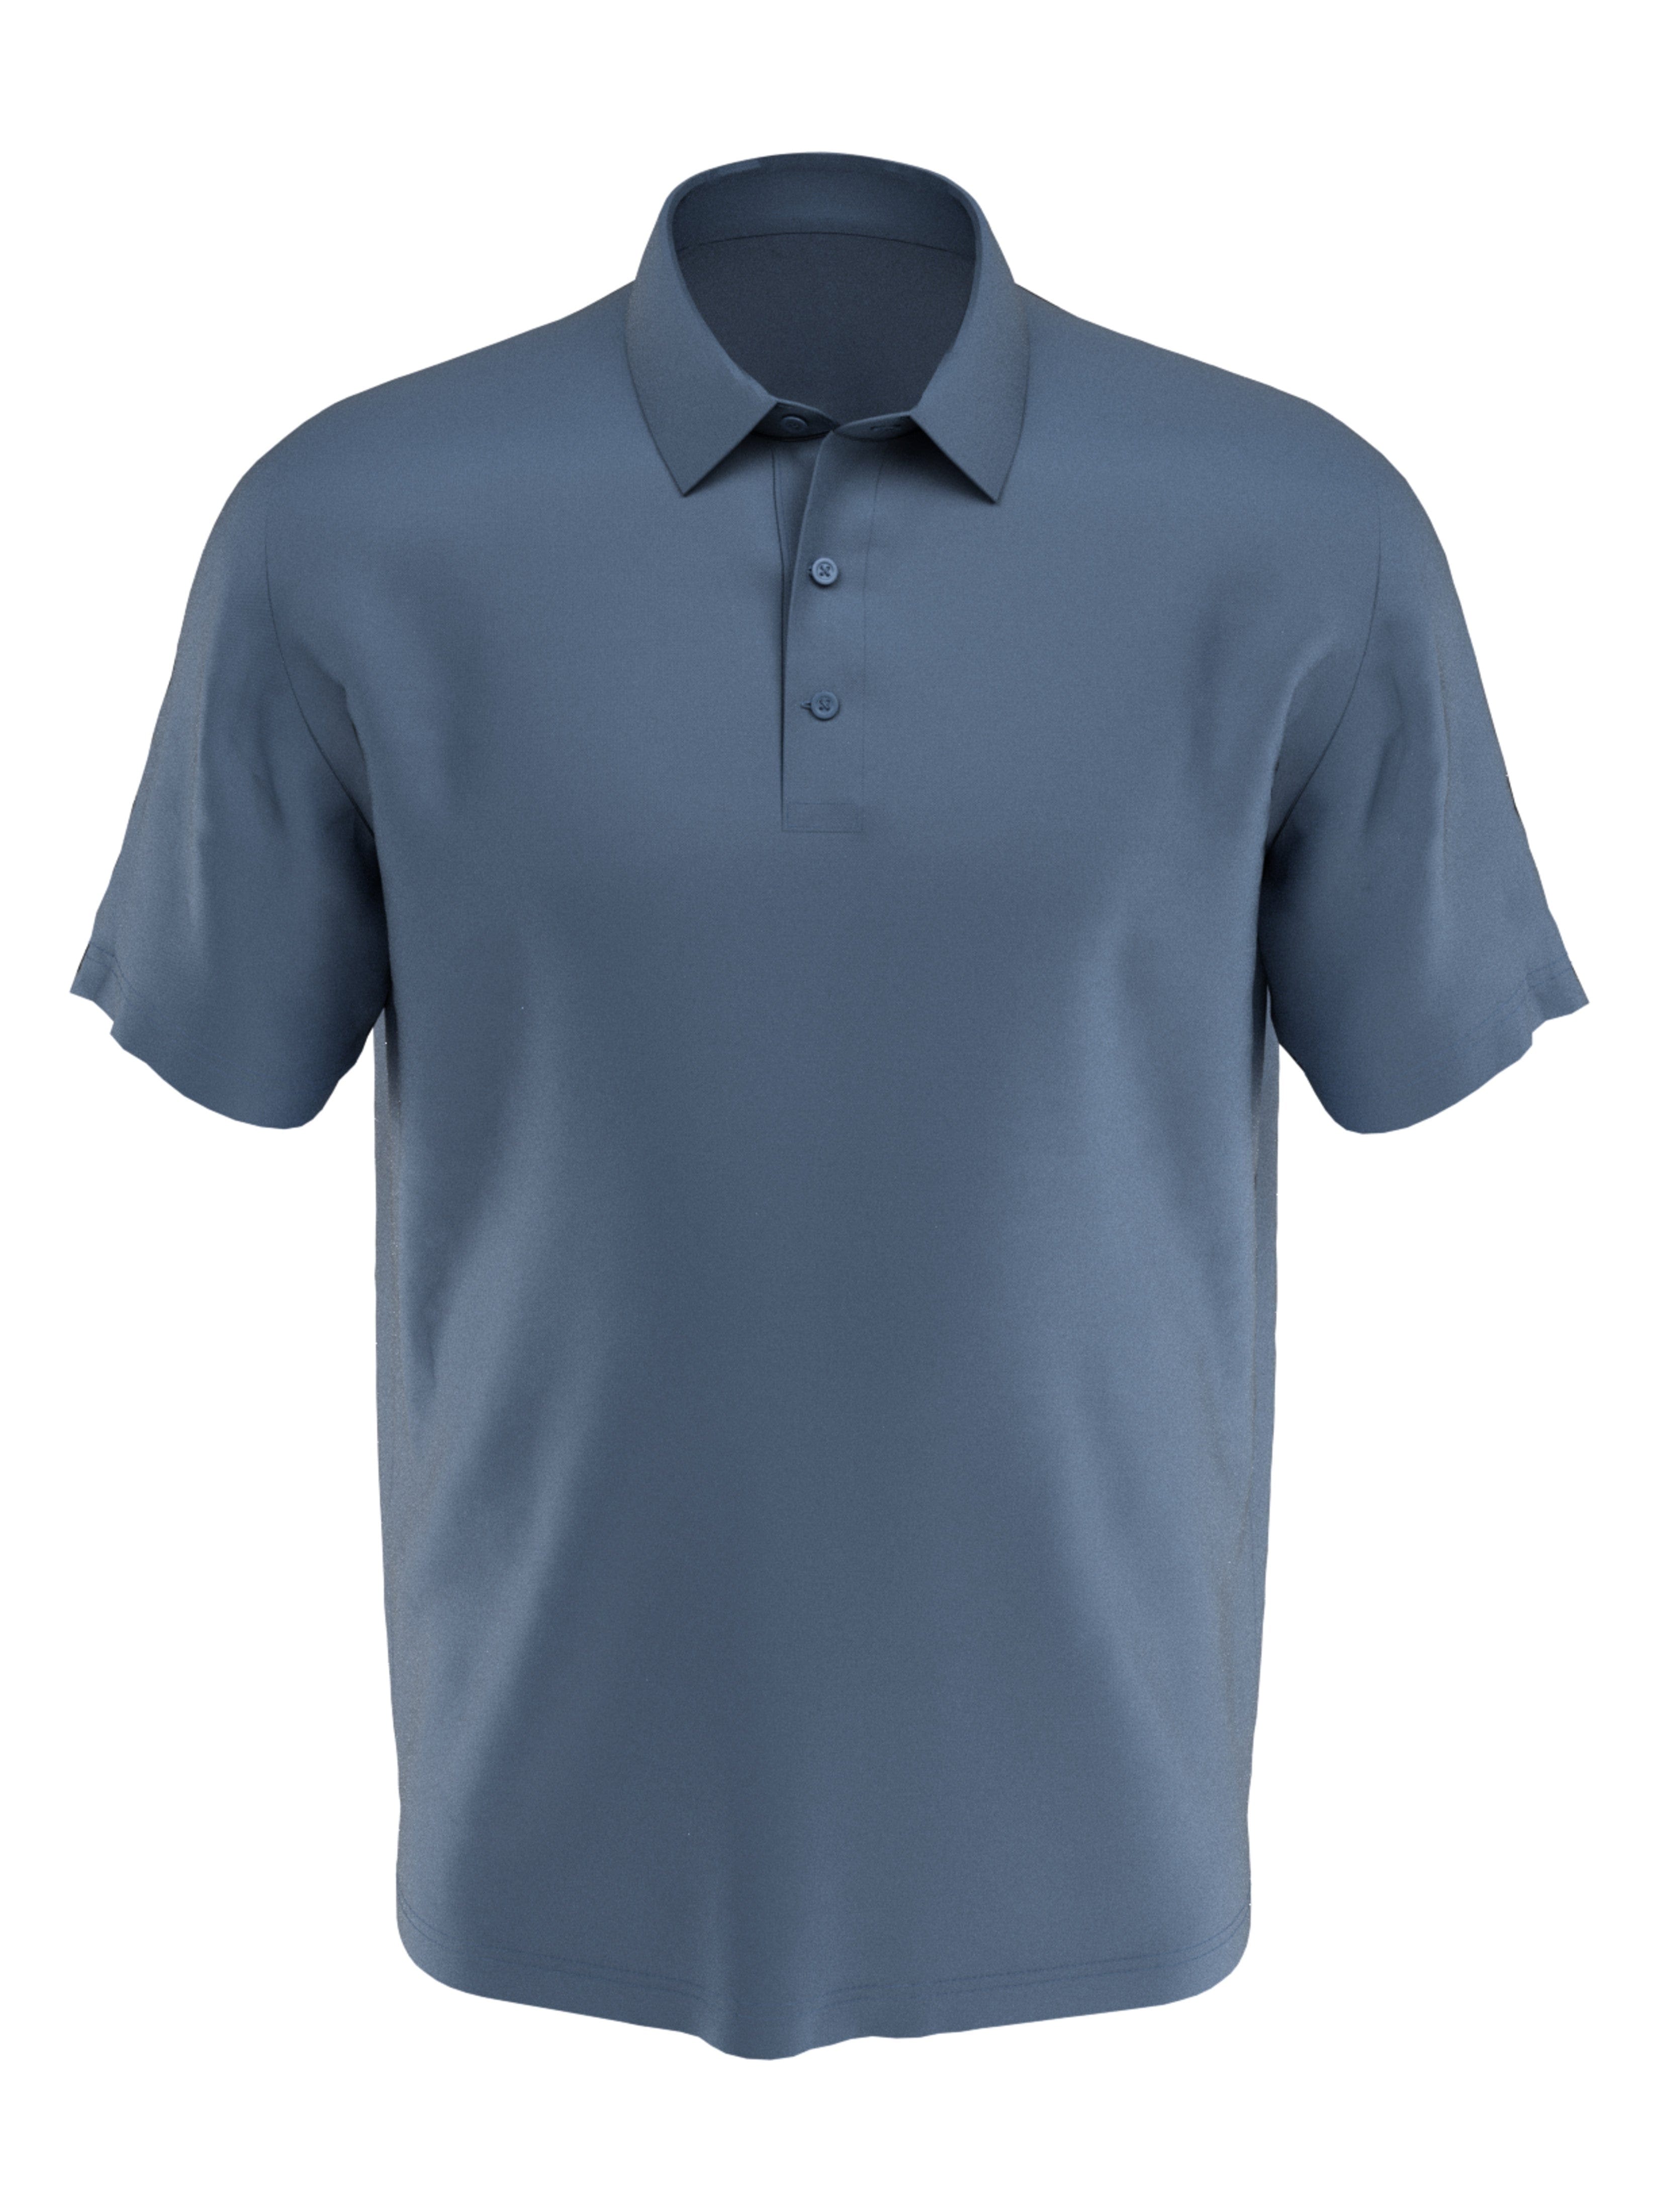 Callaway Apparel Mens Big & Tall Solid Swing Tech Golf Polo Shirt, Size 3XLT, Blue Horizon, Polyester/Elastane | Golf Apparel Shop